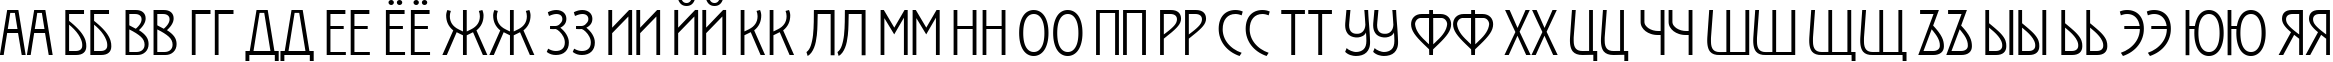 Пример написания русского алфавита шрифтом Izis One